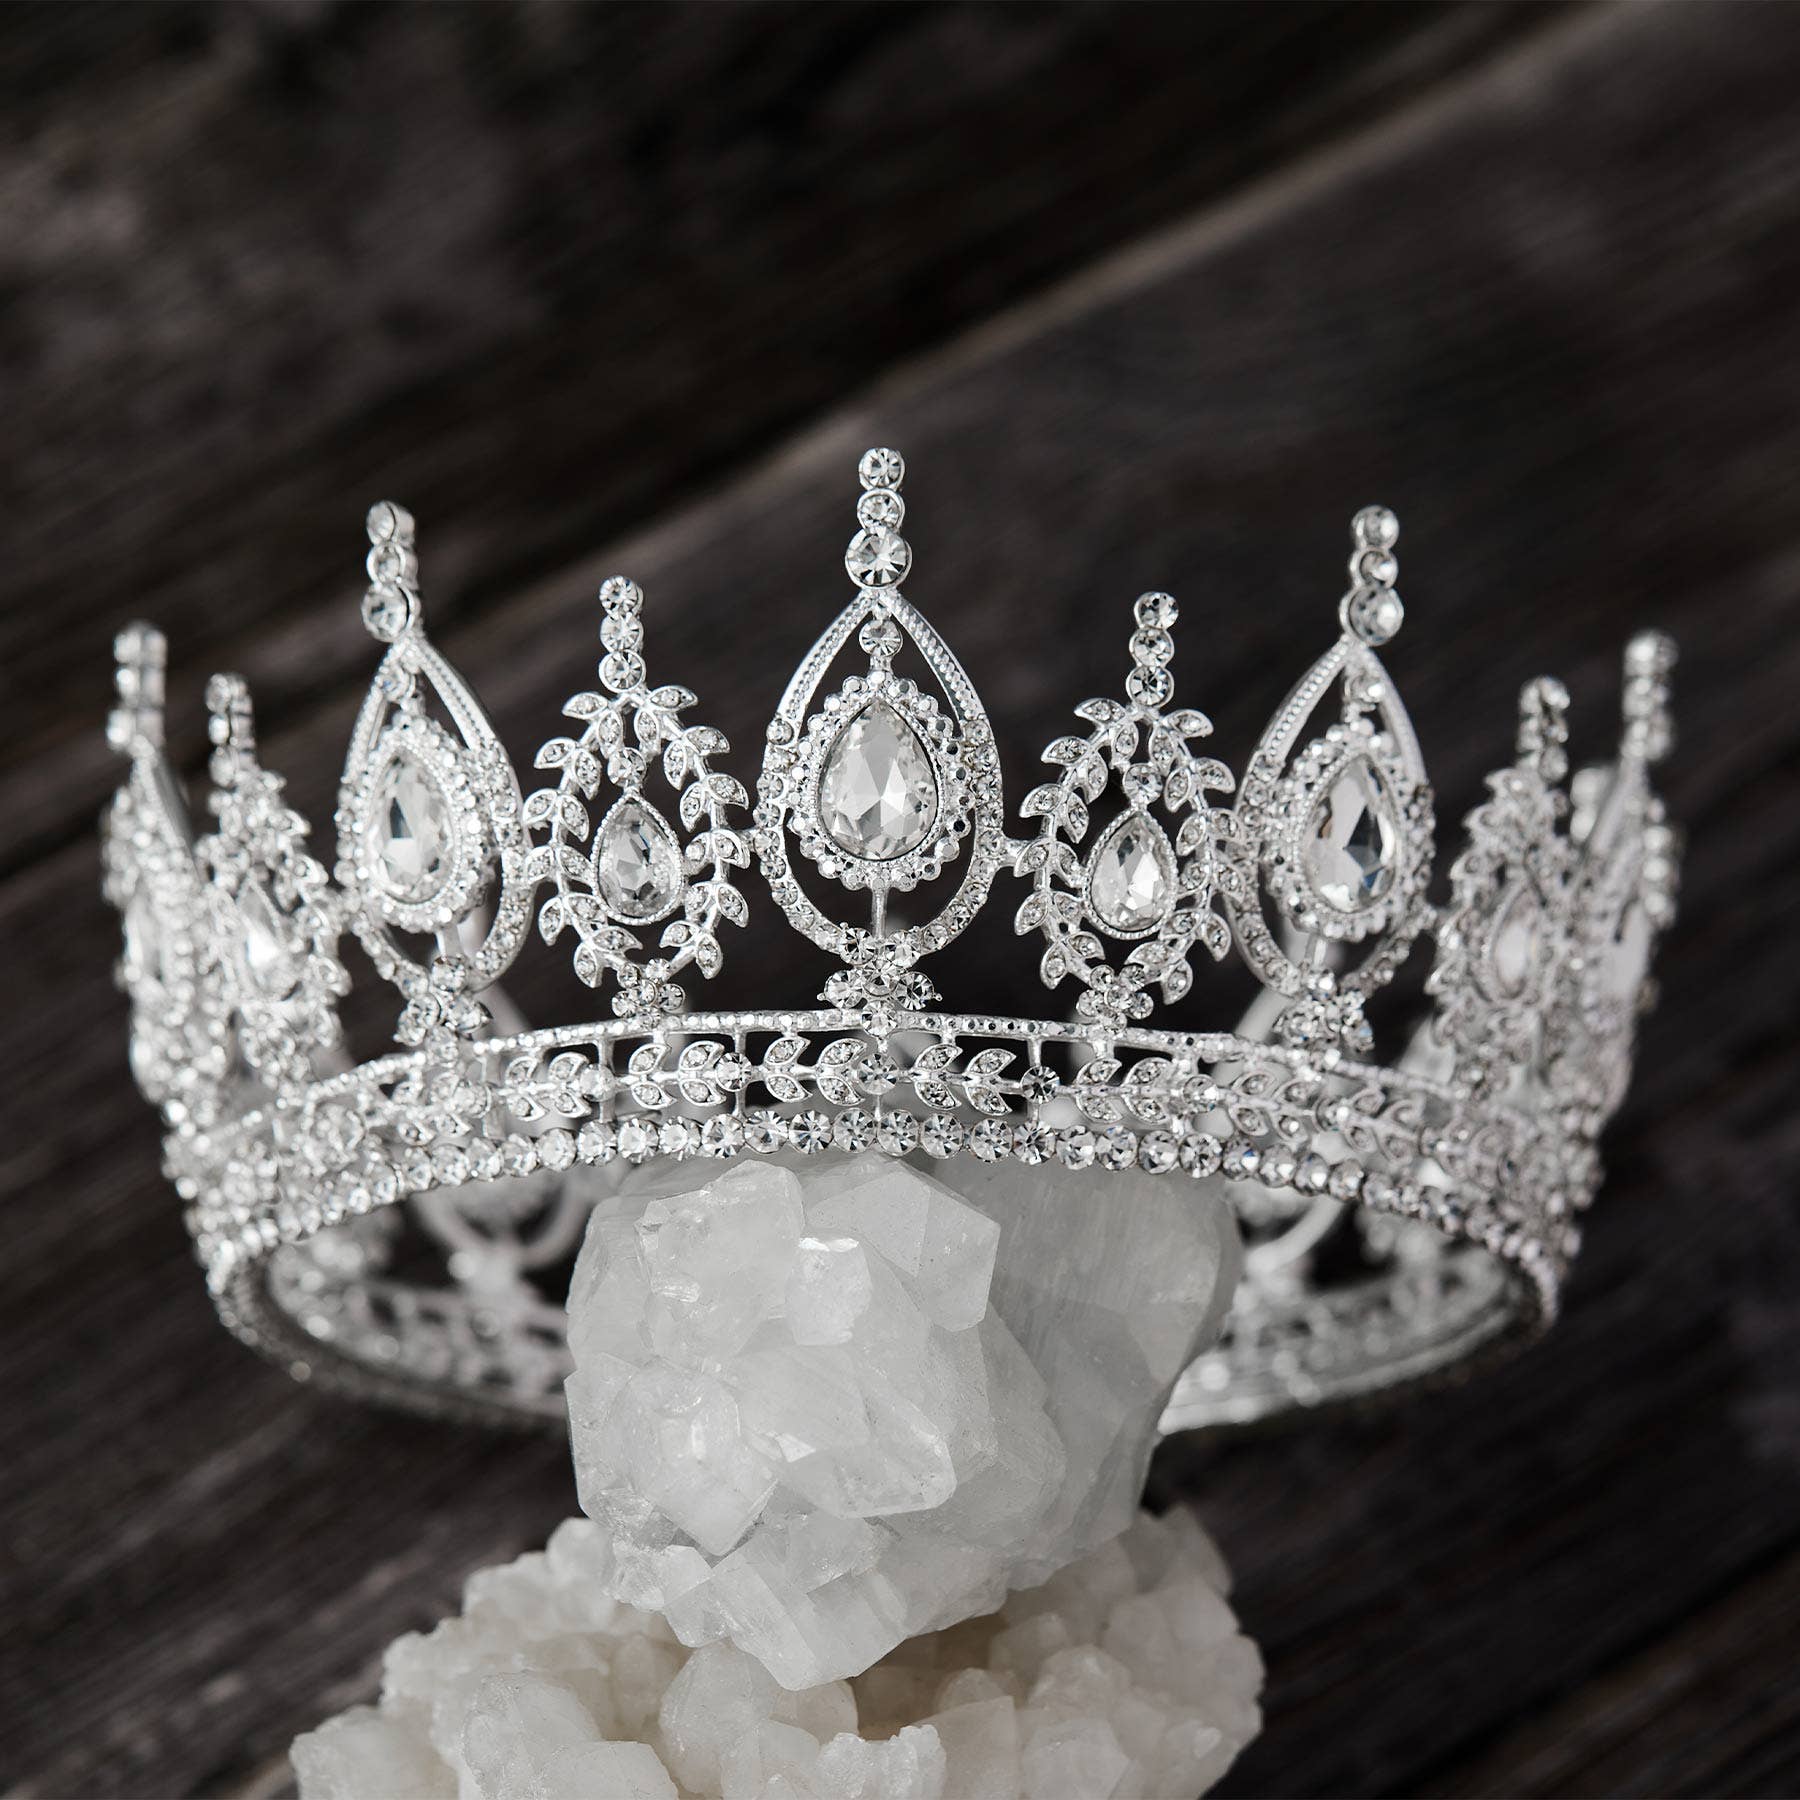 SWEETV Royal Queen Crown for Women: Black